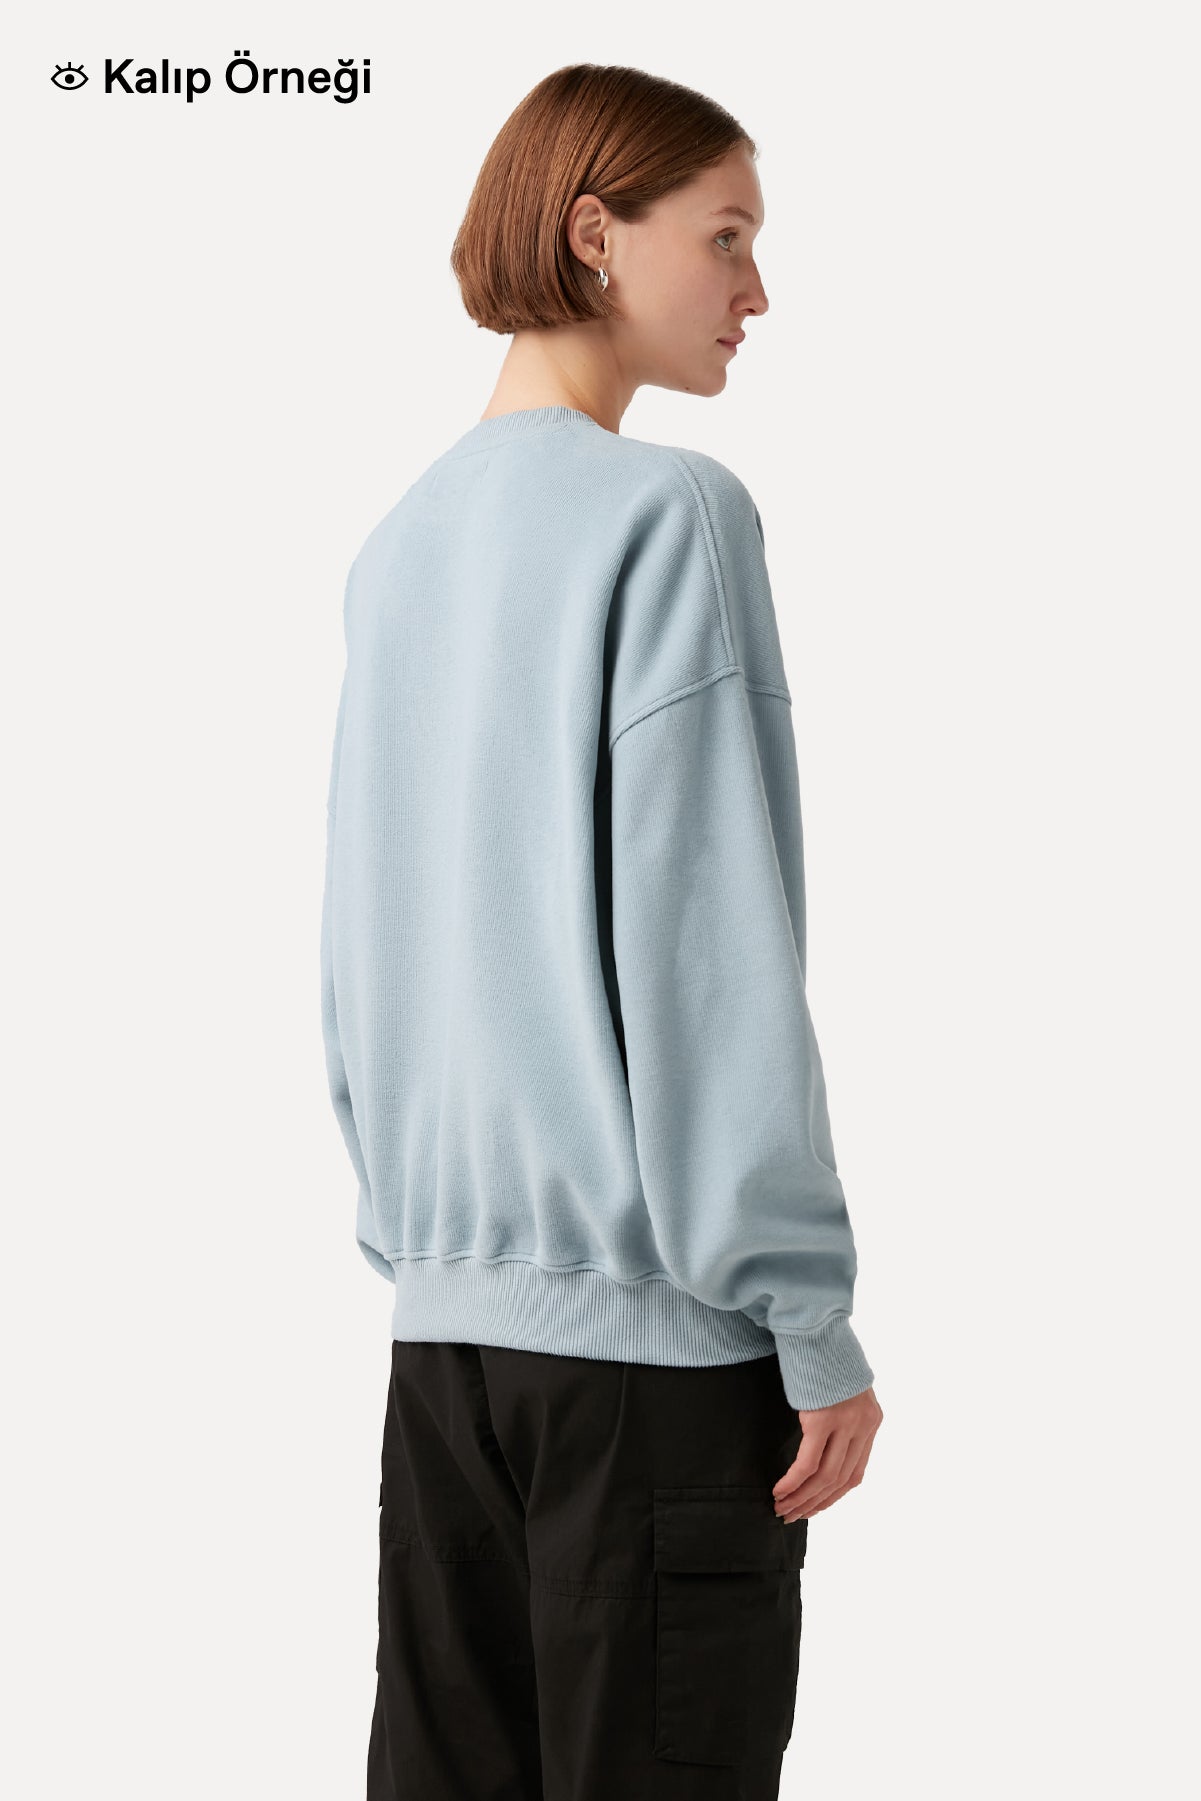 Yavru İmparator Penguen Super Soft Oversize Sweatshirt - Mor